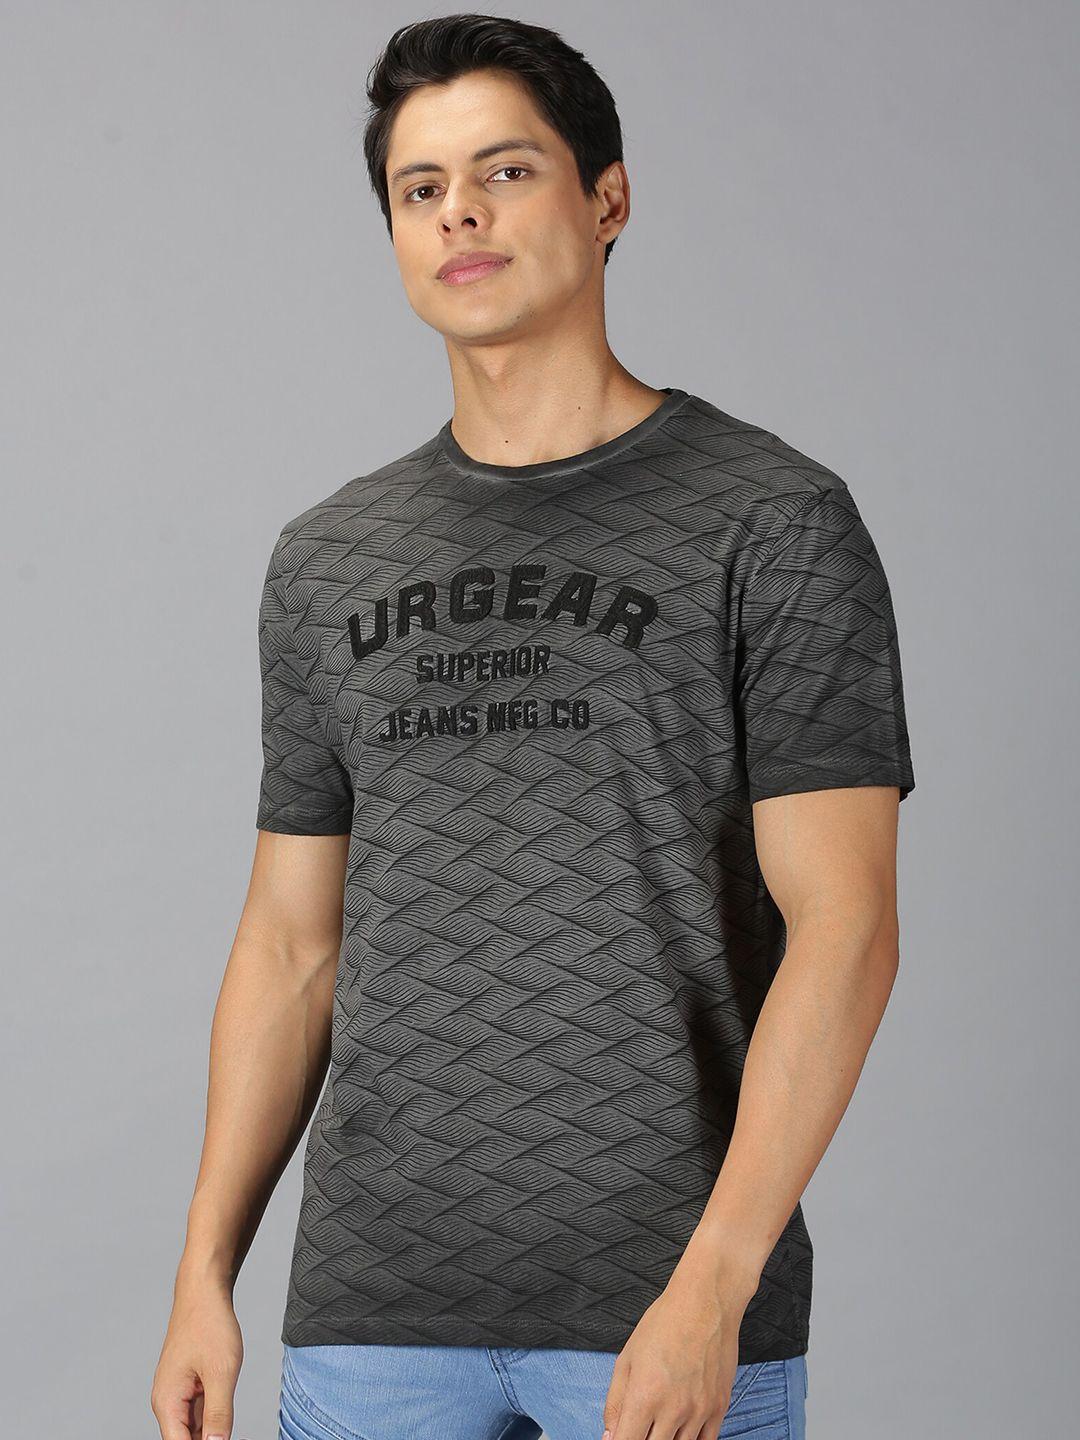 urgear-men-grey-typography-striped-t-shirt